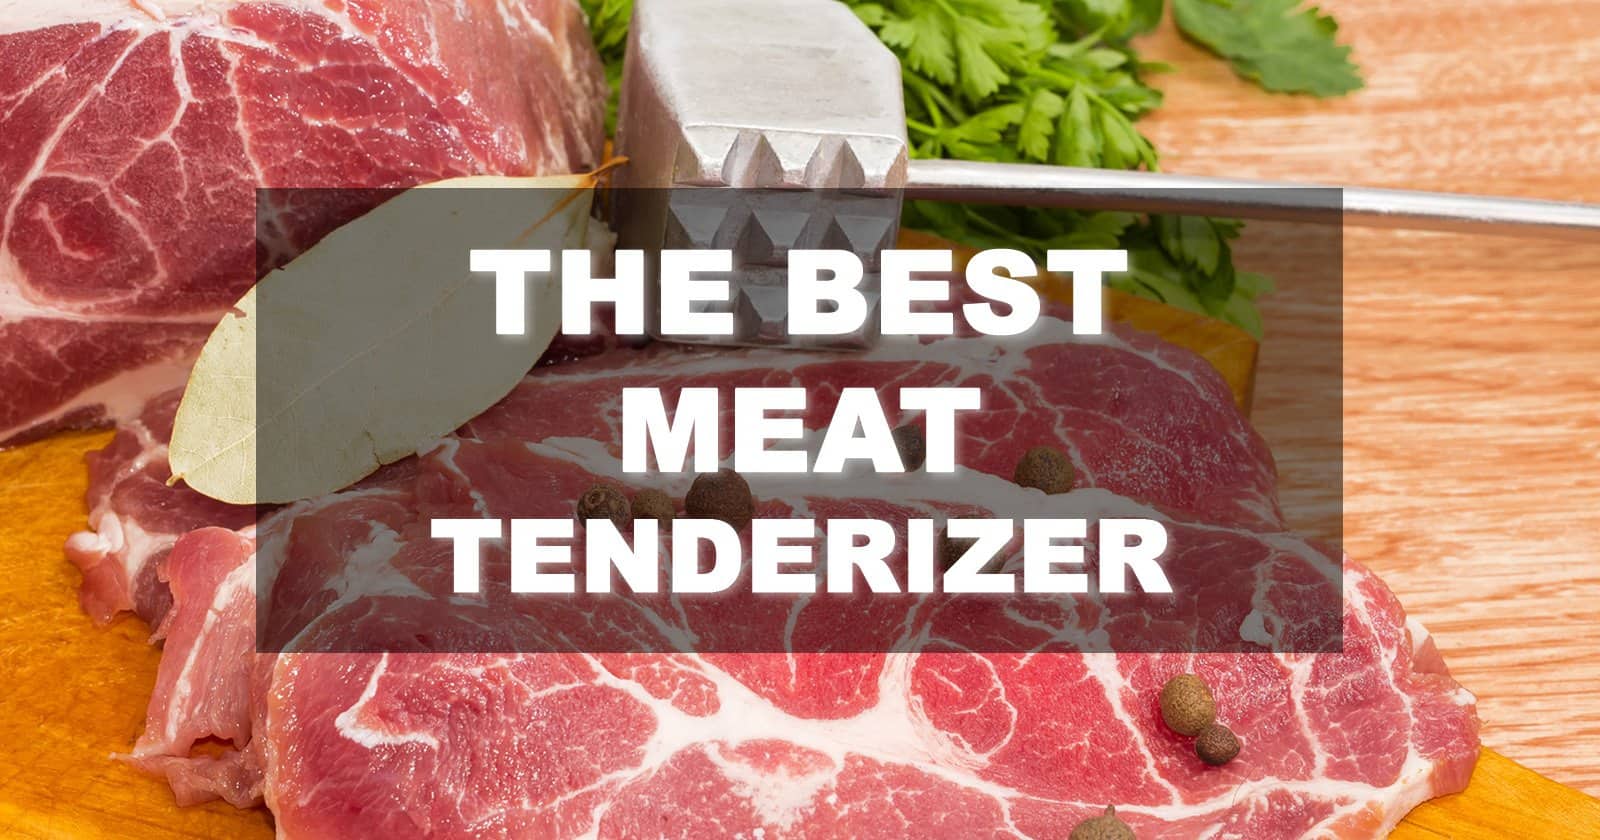 The best meat tenderizer